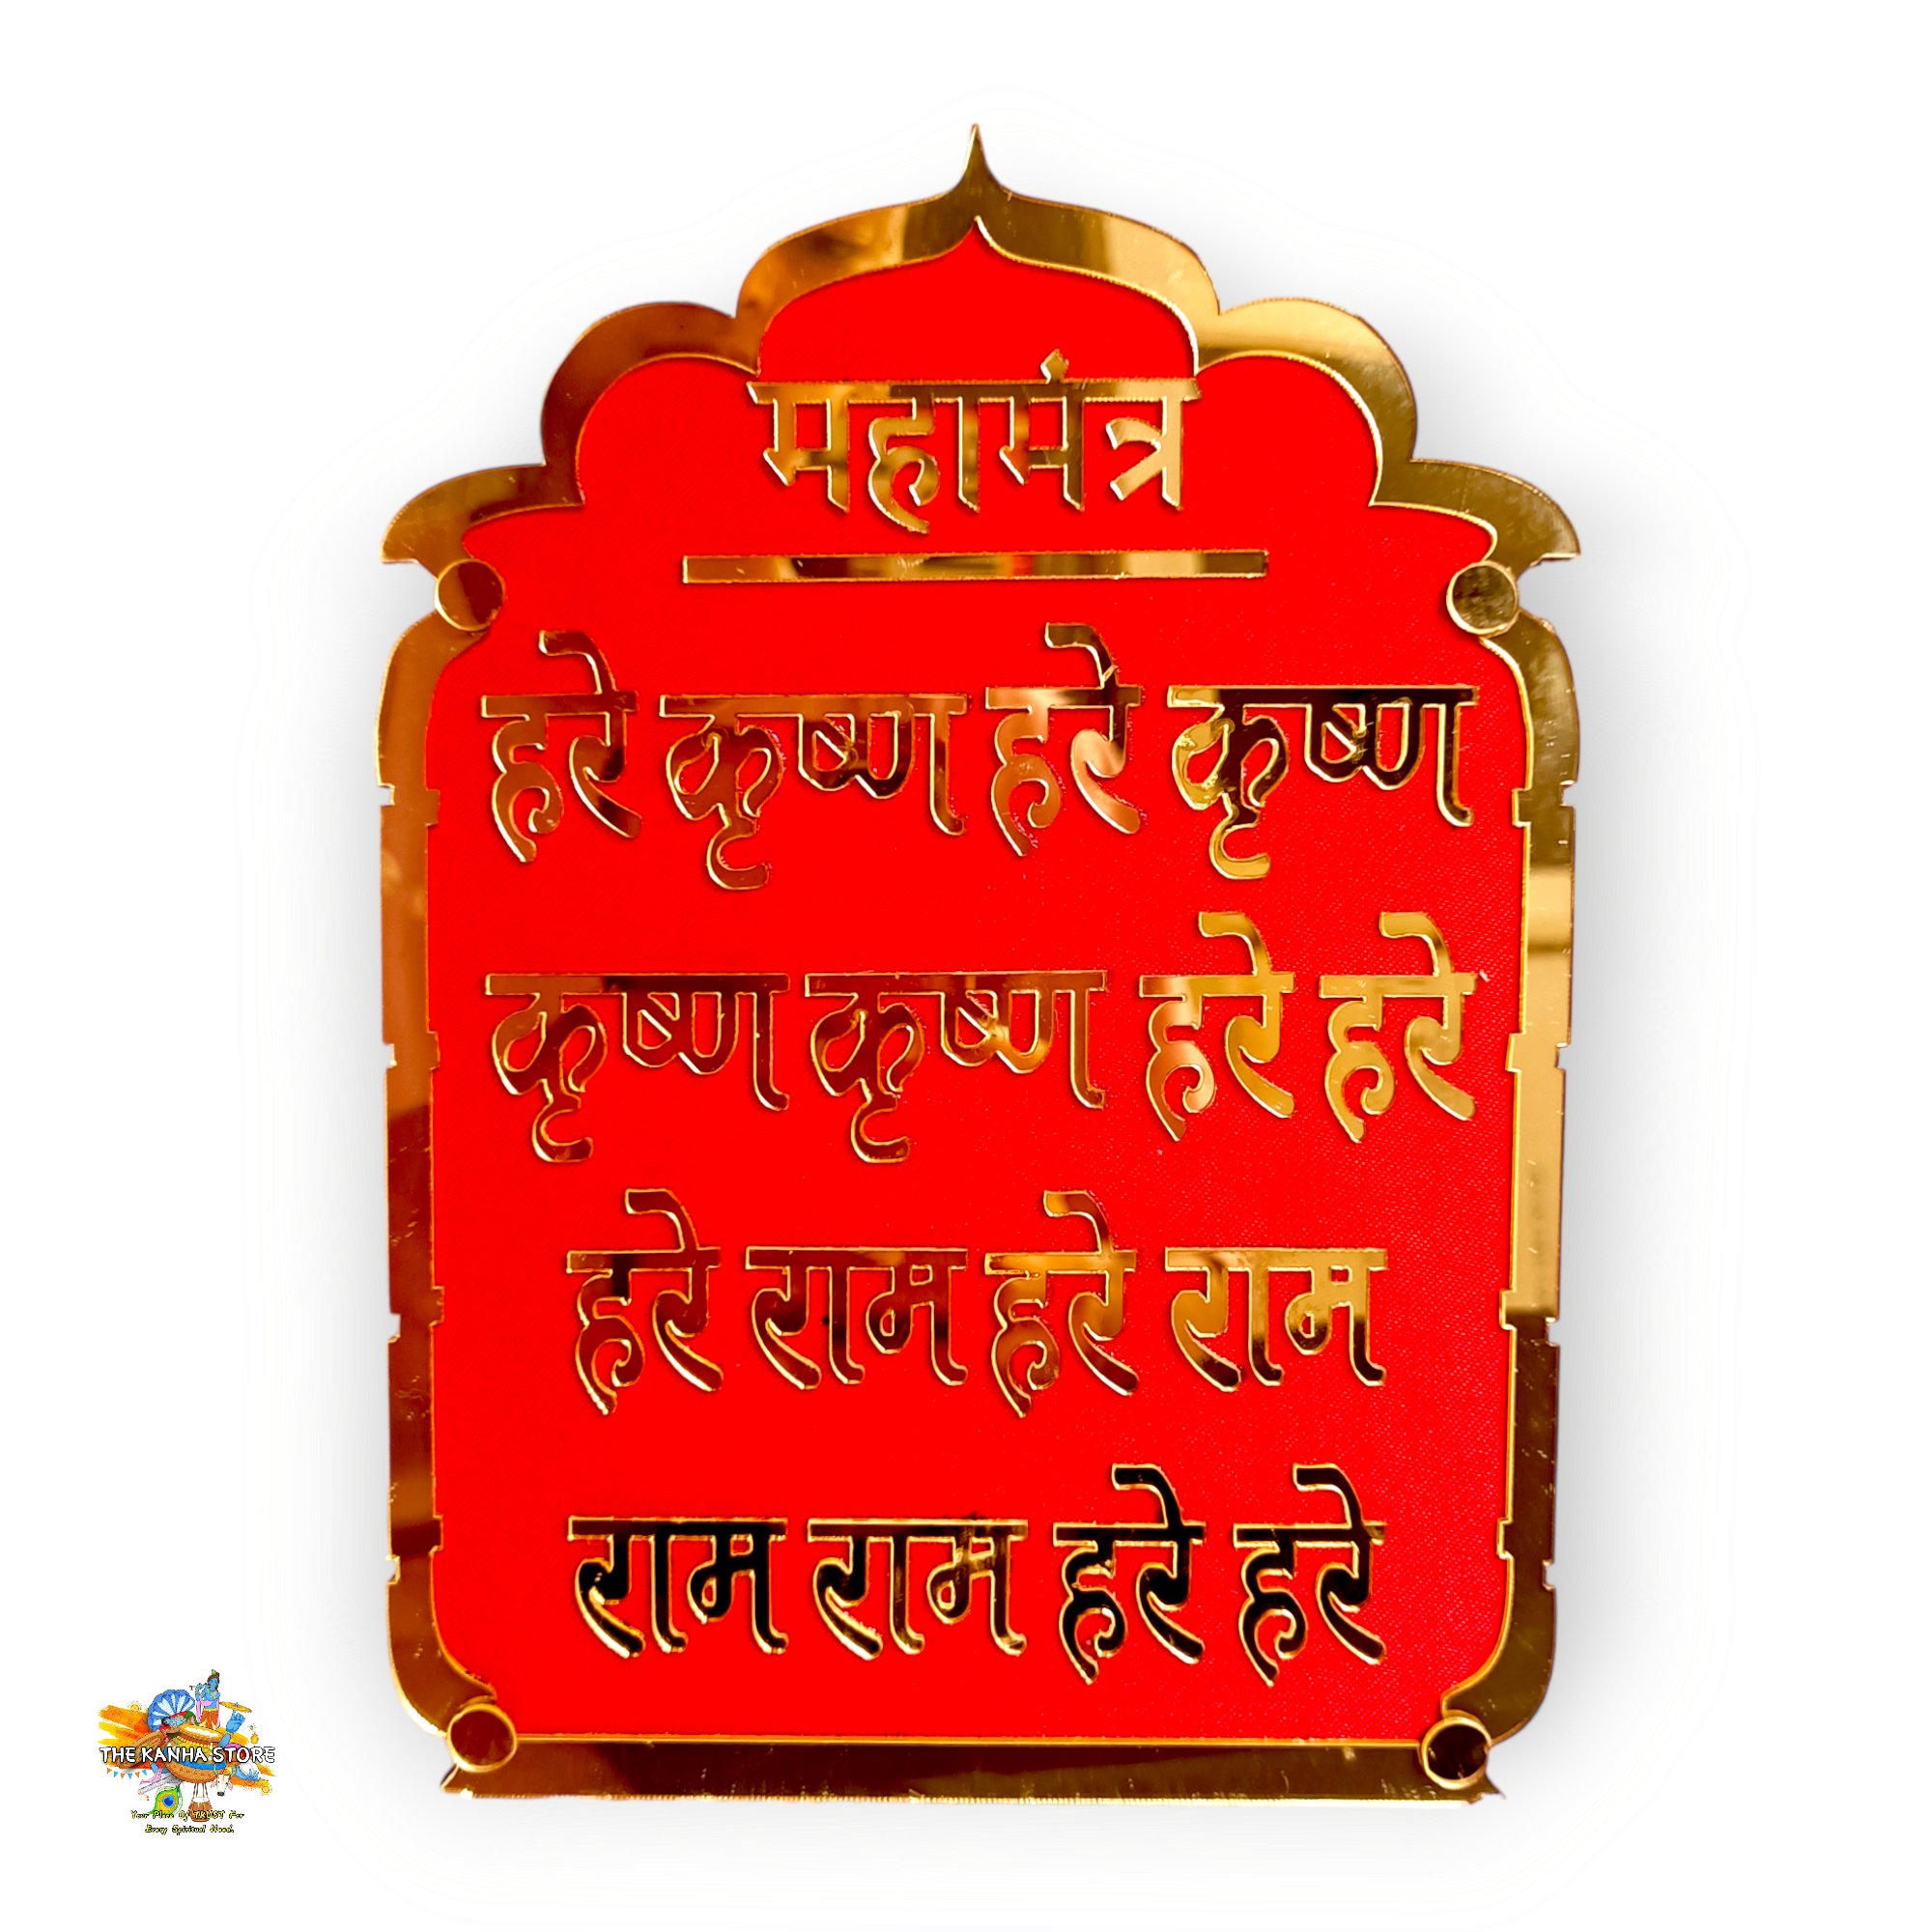 Hare Krishna Mantra metal sticker